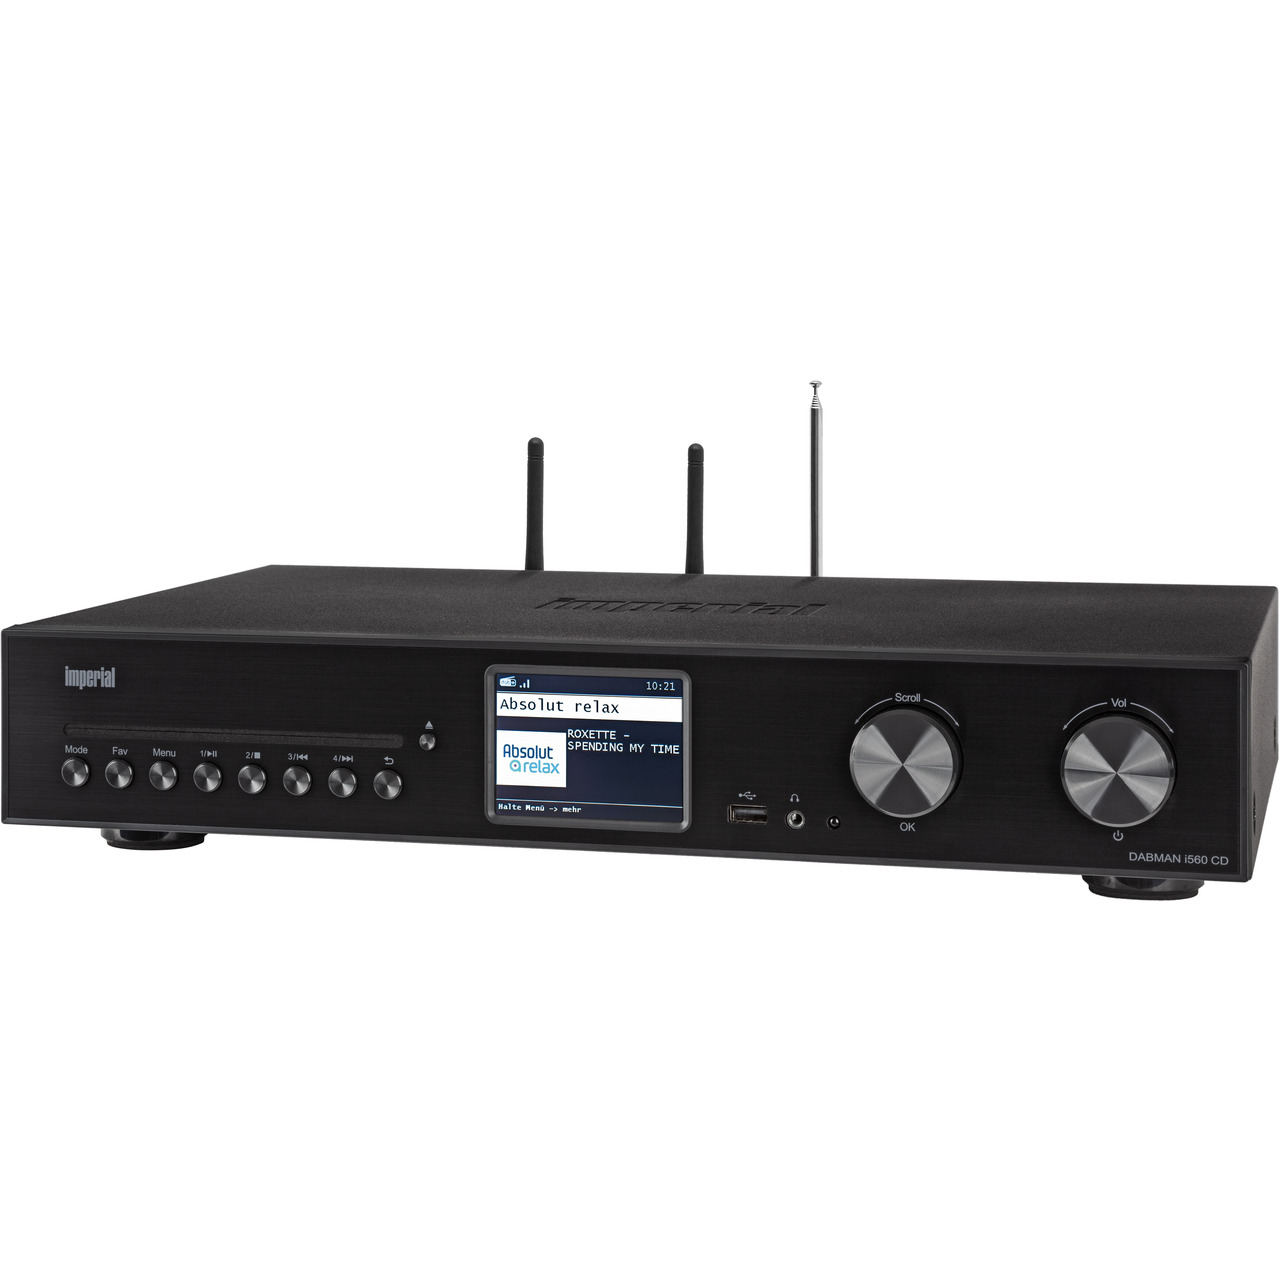  Imperial Radio-Hi-Fi-Tuner DABMAN i560 CD- DAB+-UKW-Internetradio- Verstärker- Bluetooth- CD-Player